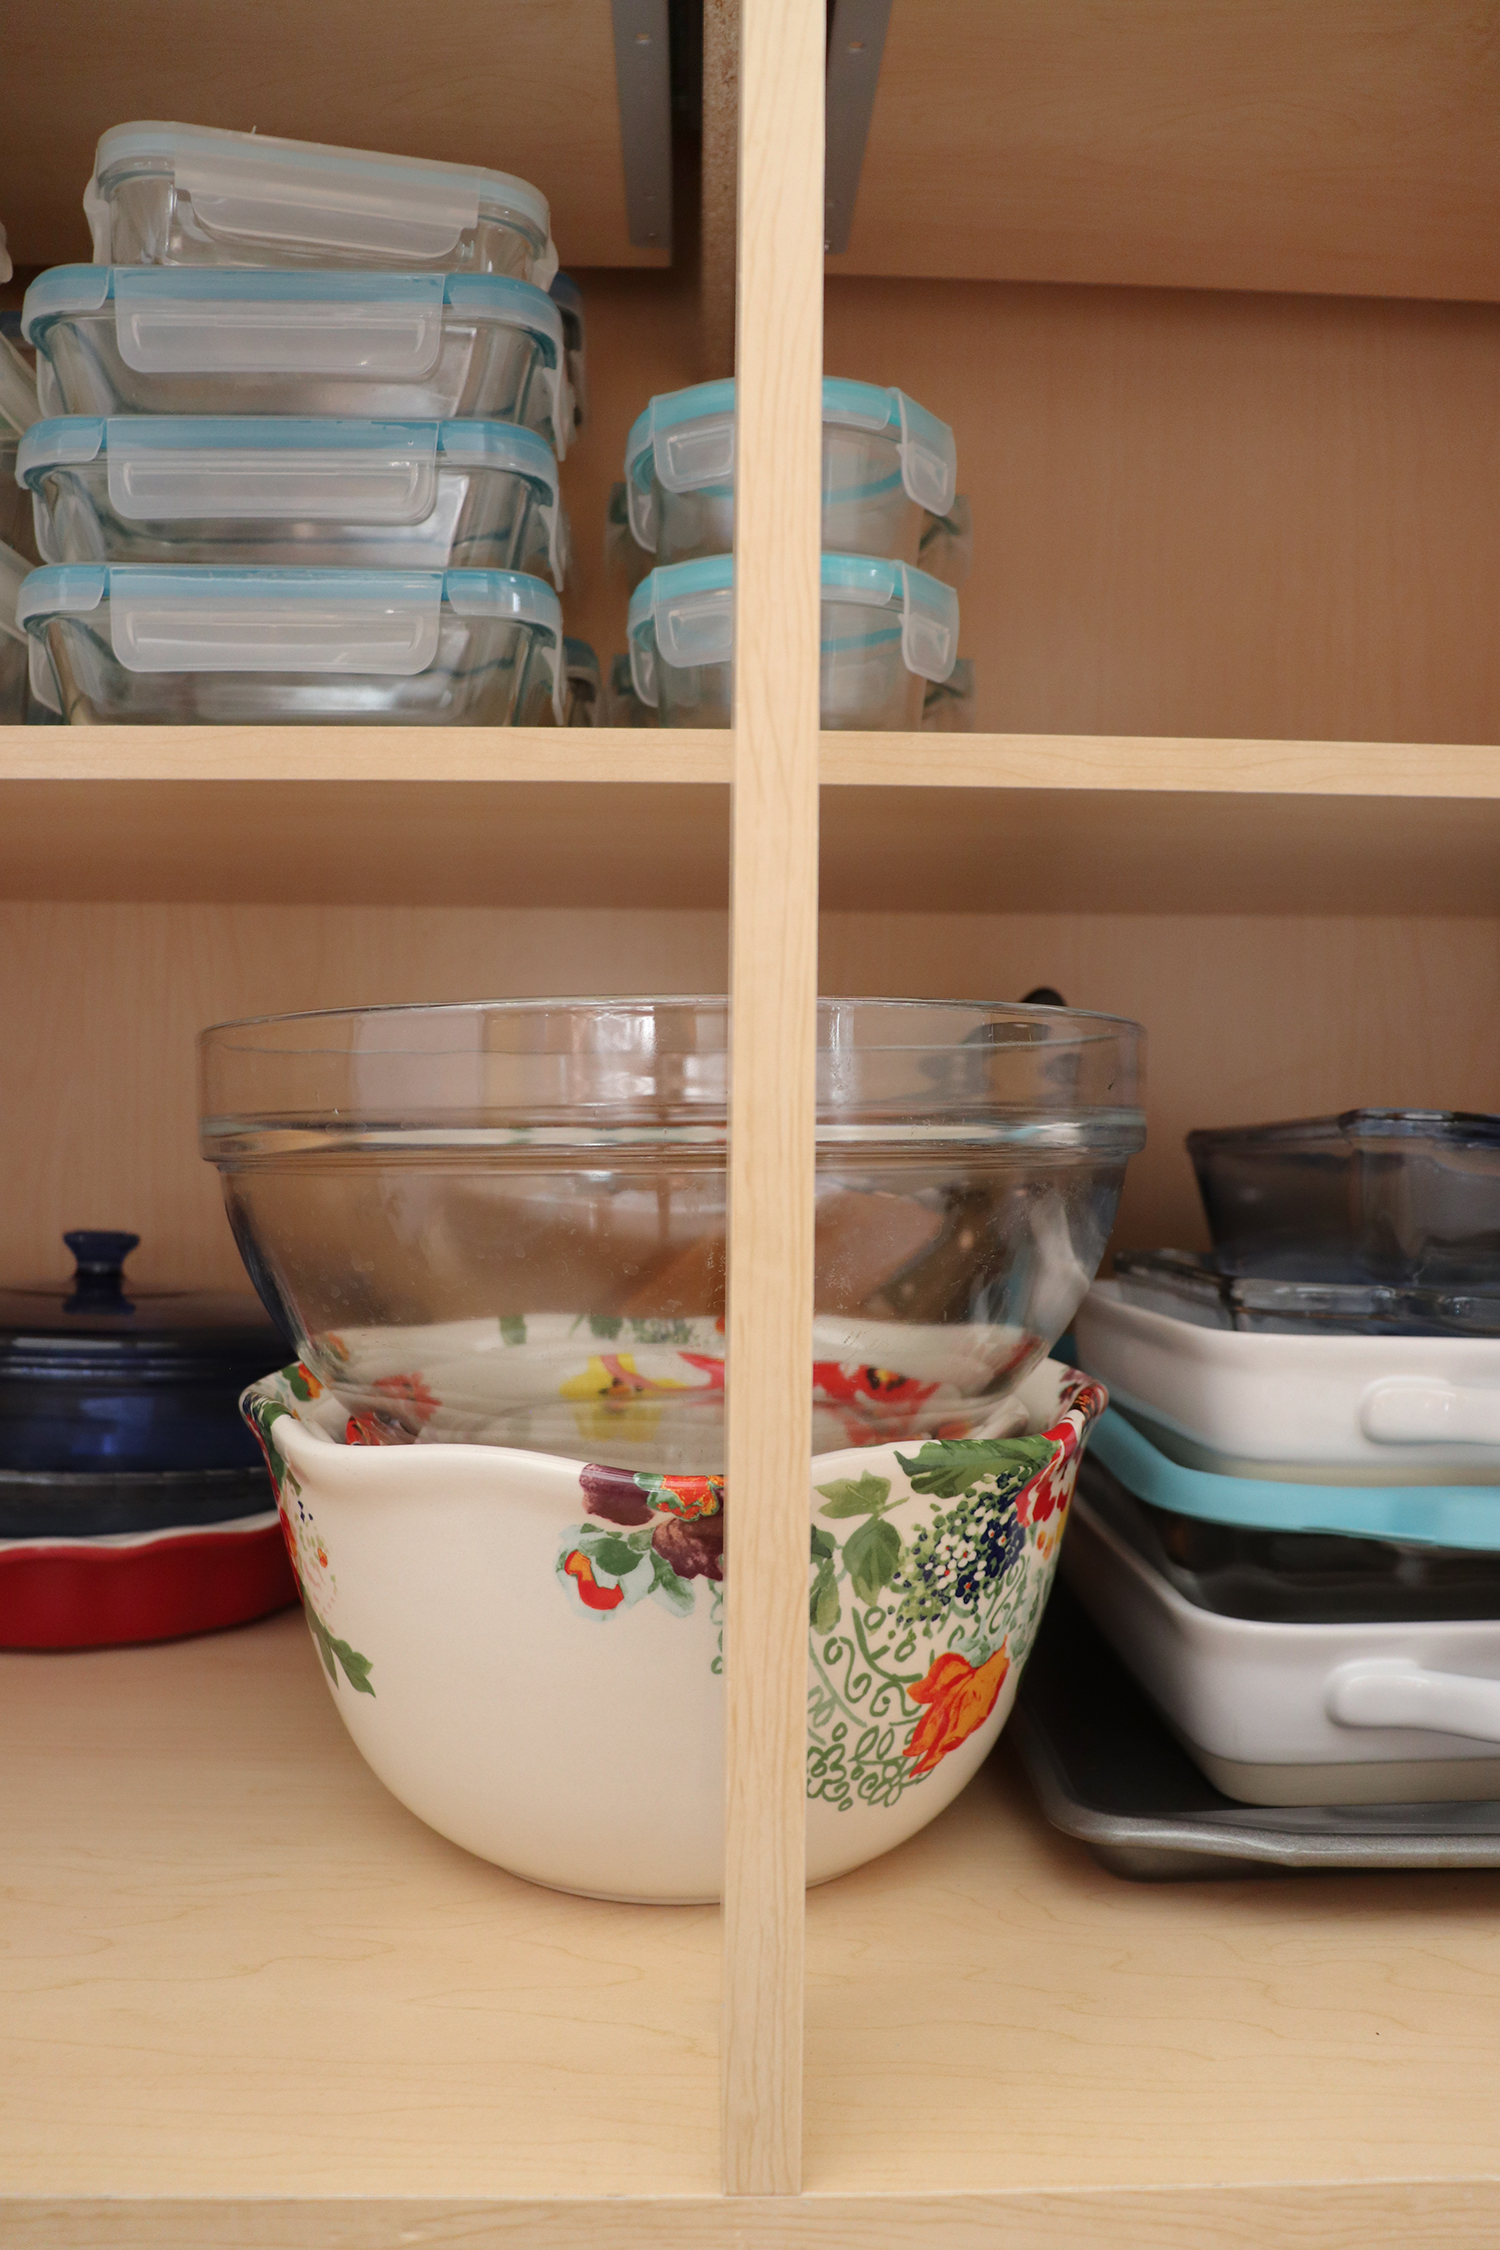 kitchen cabinet organization - least used bowls